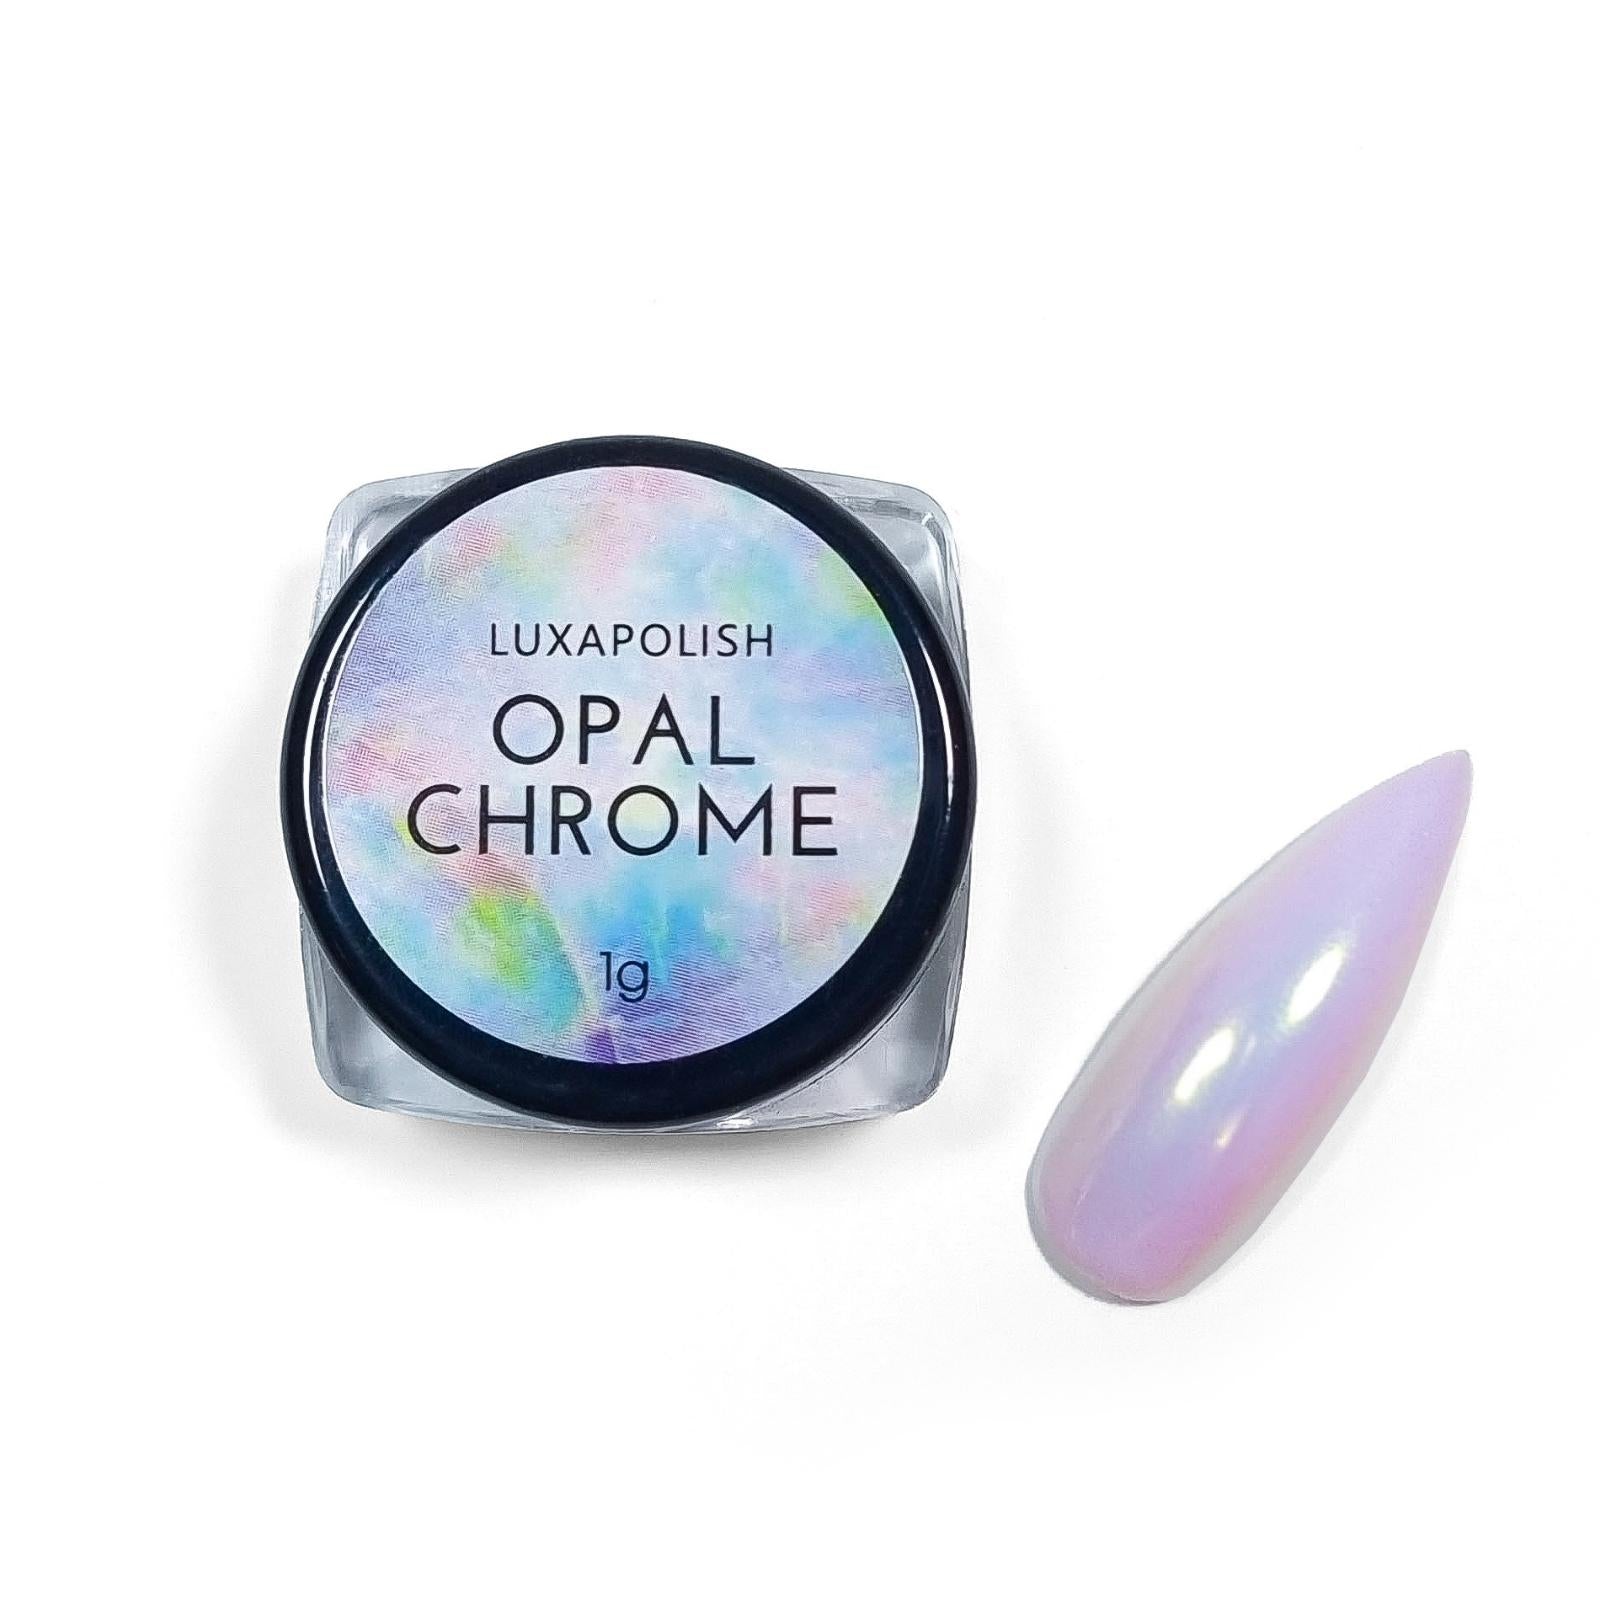 Luxapolish Opal Chrome